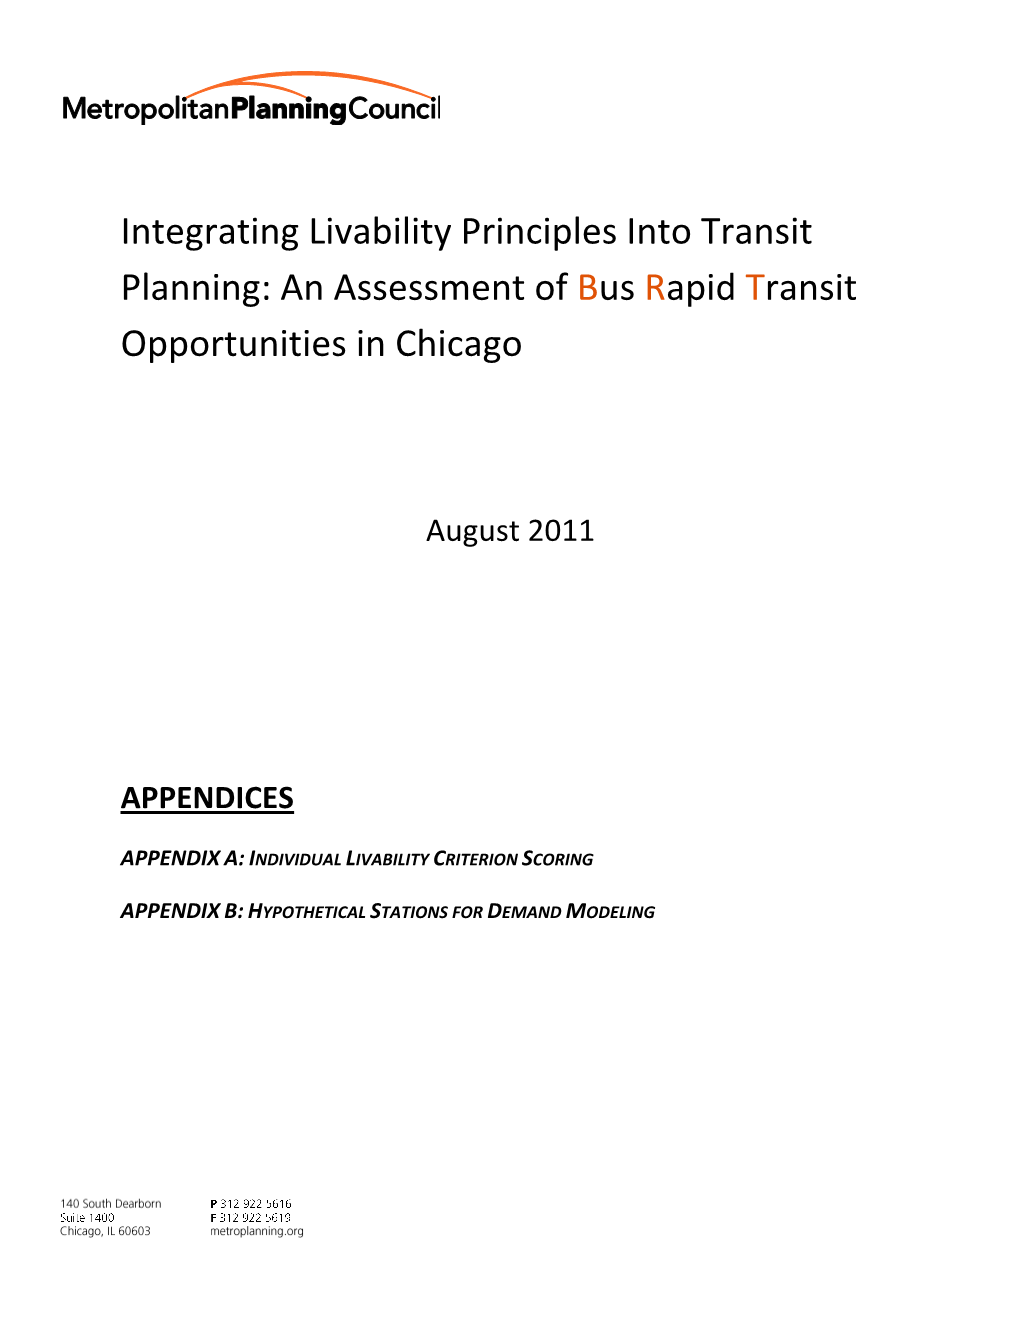 BRT Public Report Appendix